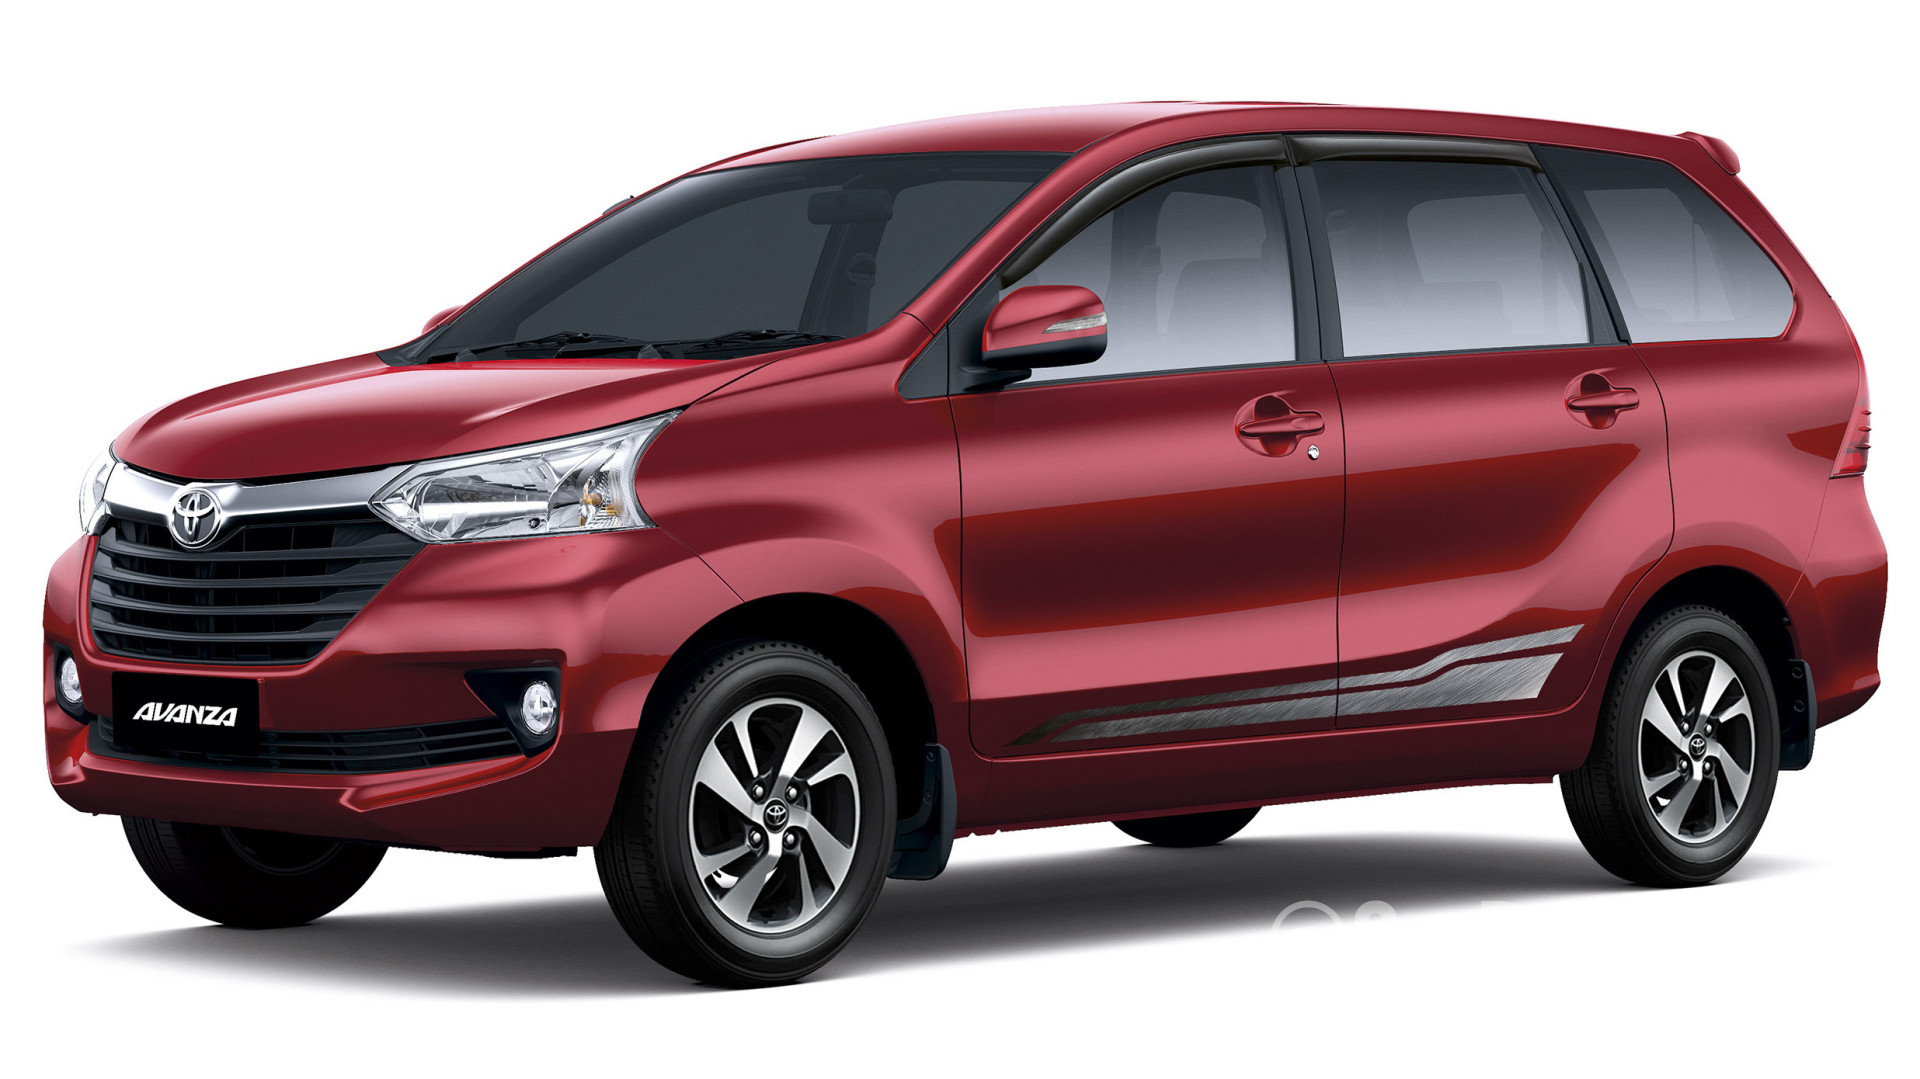 Toyota Avanza Mk2 Facelift (2015) Exterior Image #24556 in 